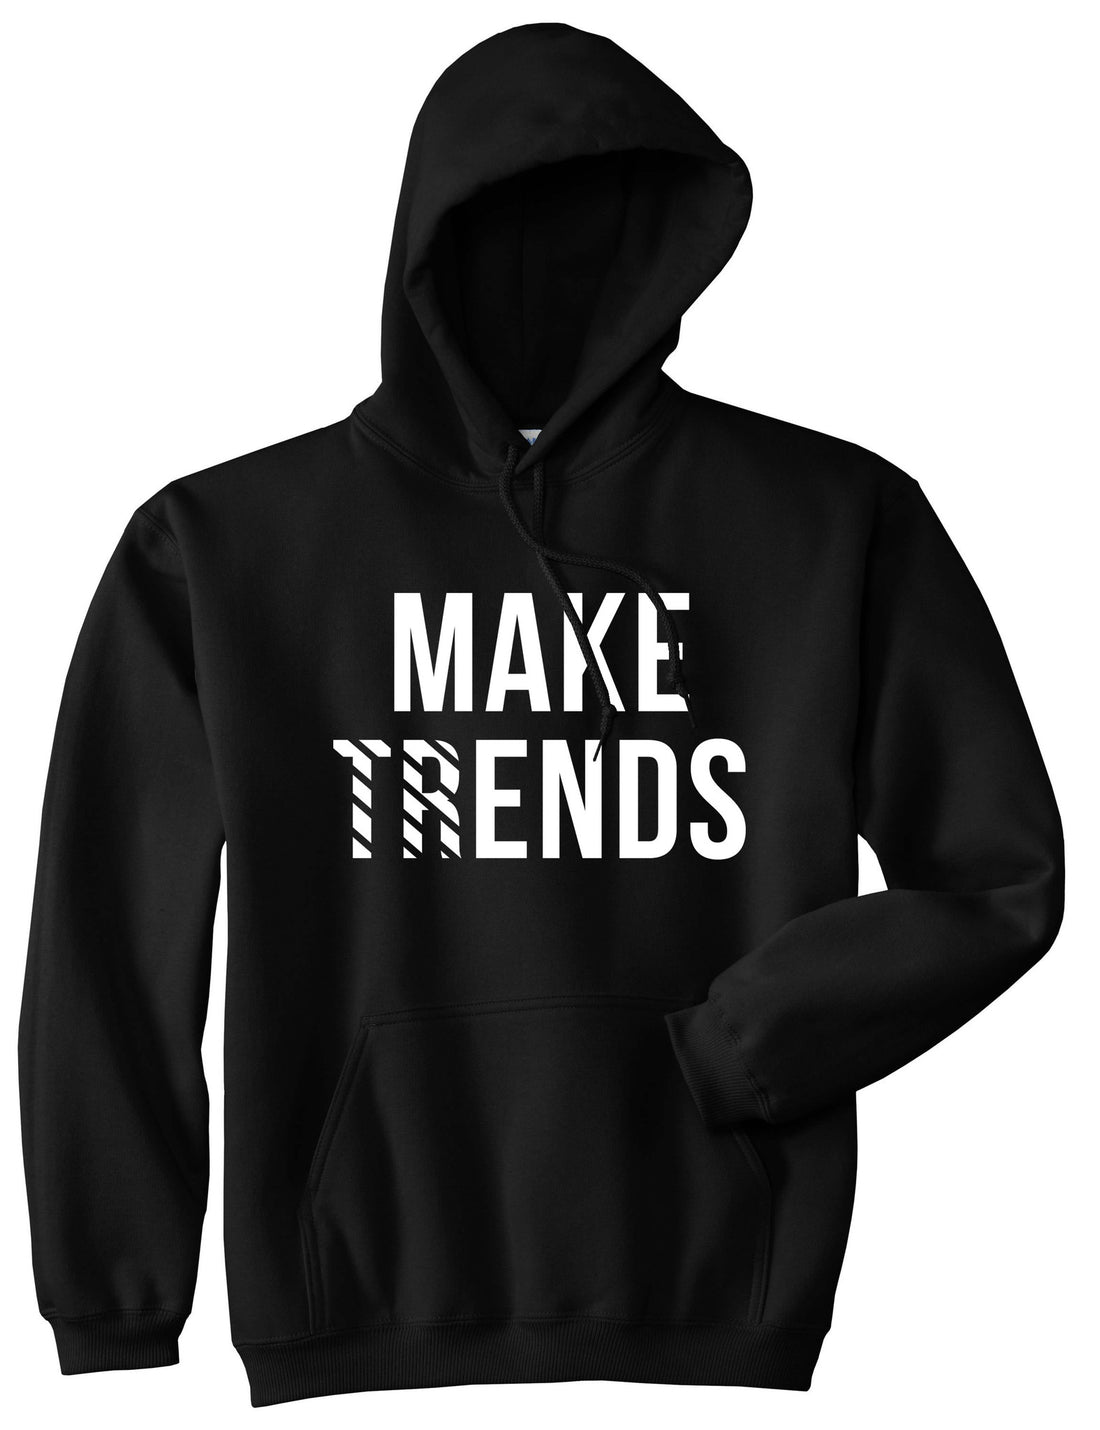 Make Trends Make Ends Boys Kids Pullover Hoodie Hoody in Black by Kings Of NY